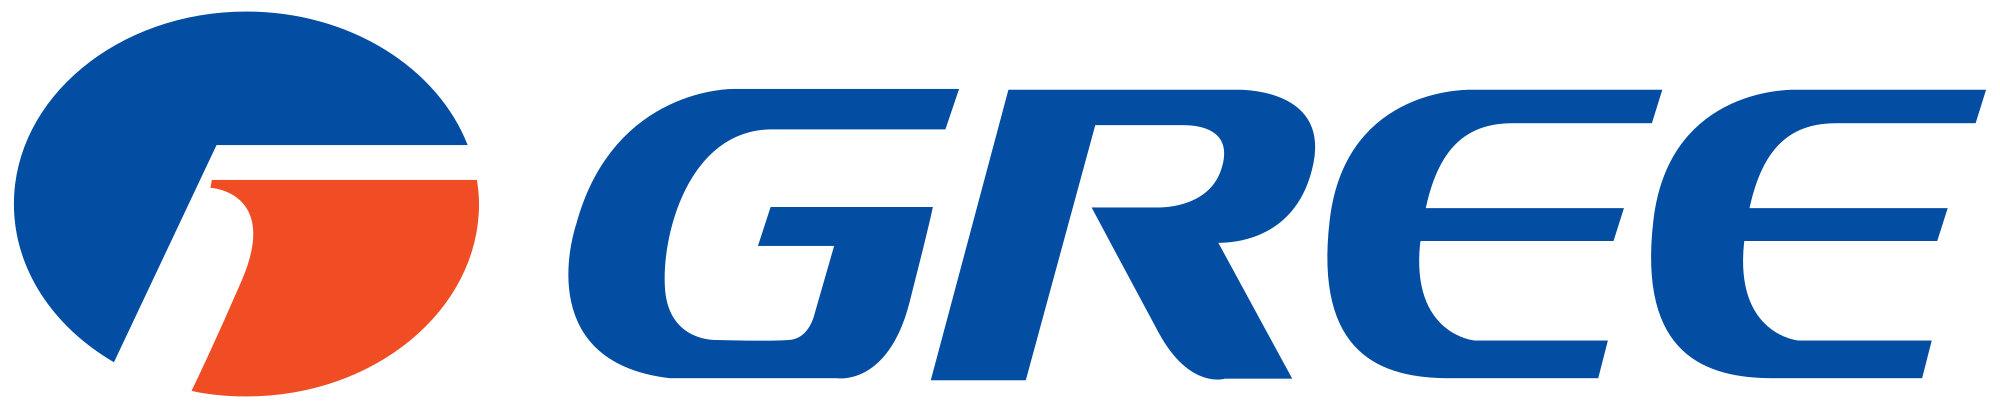 gree_logo